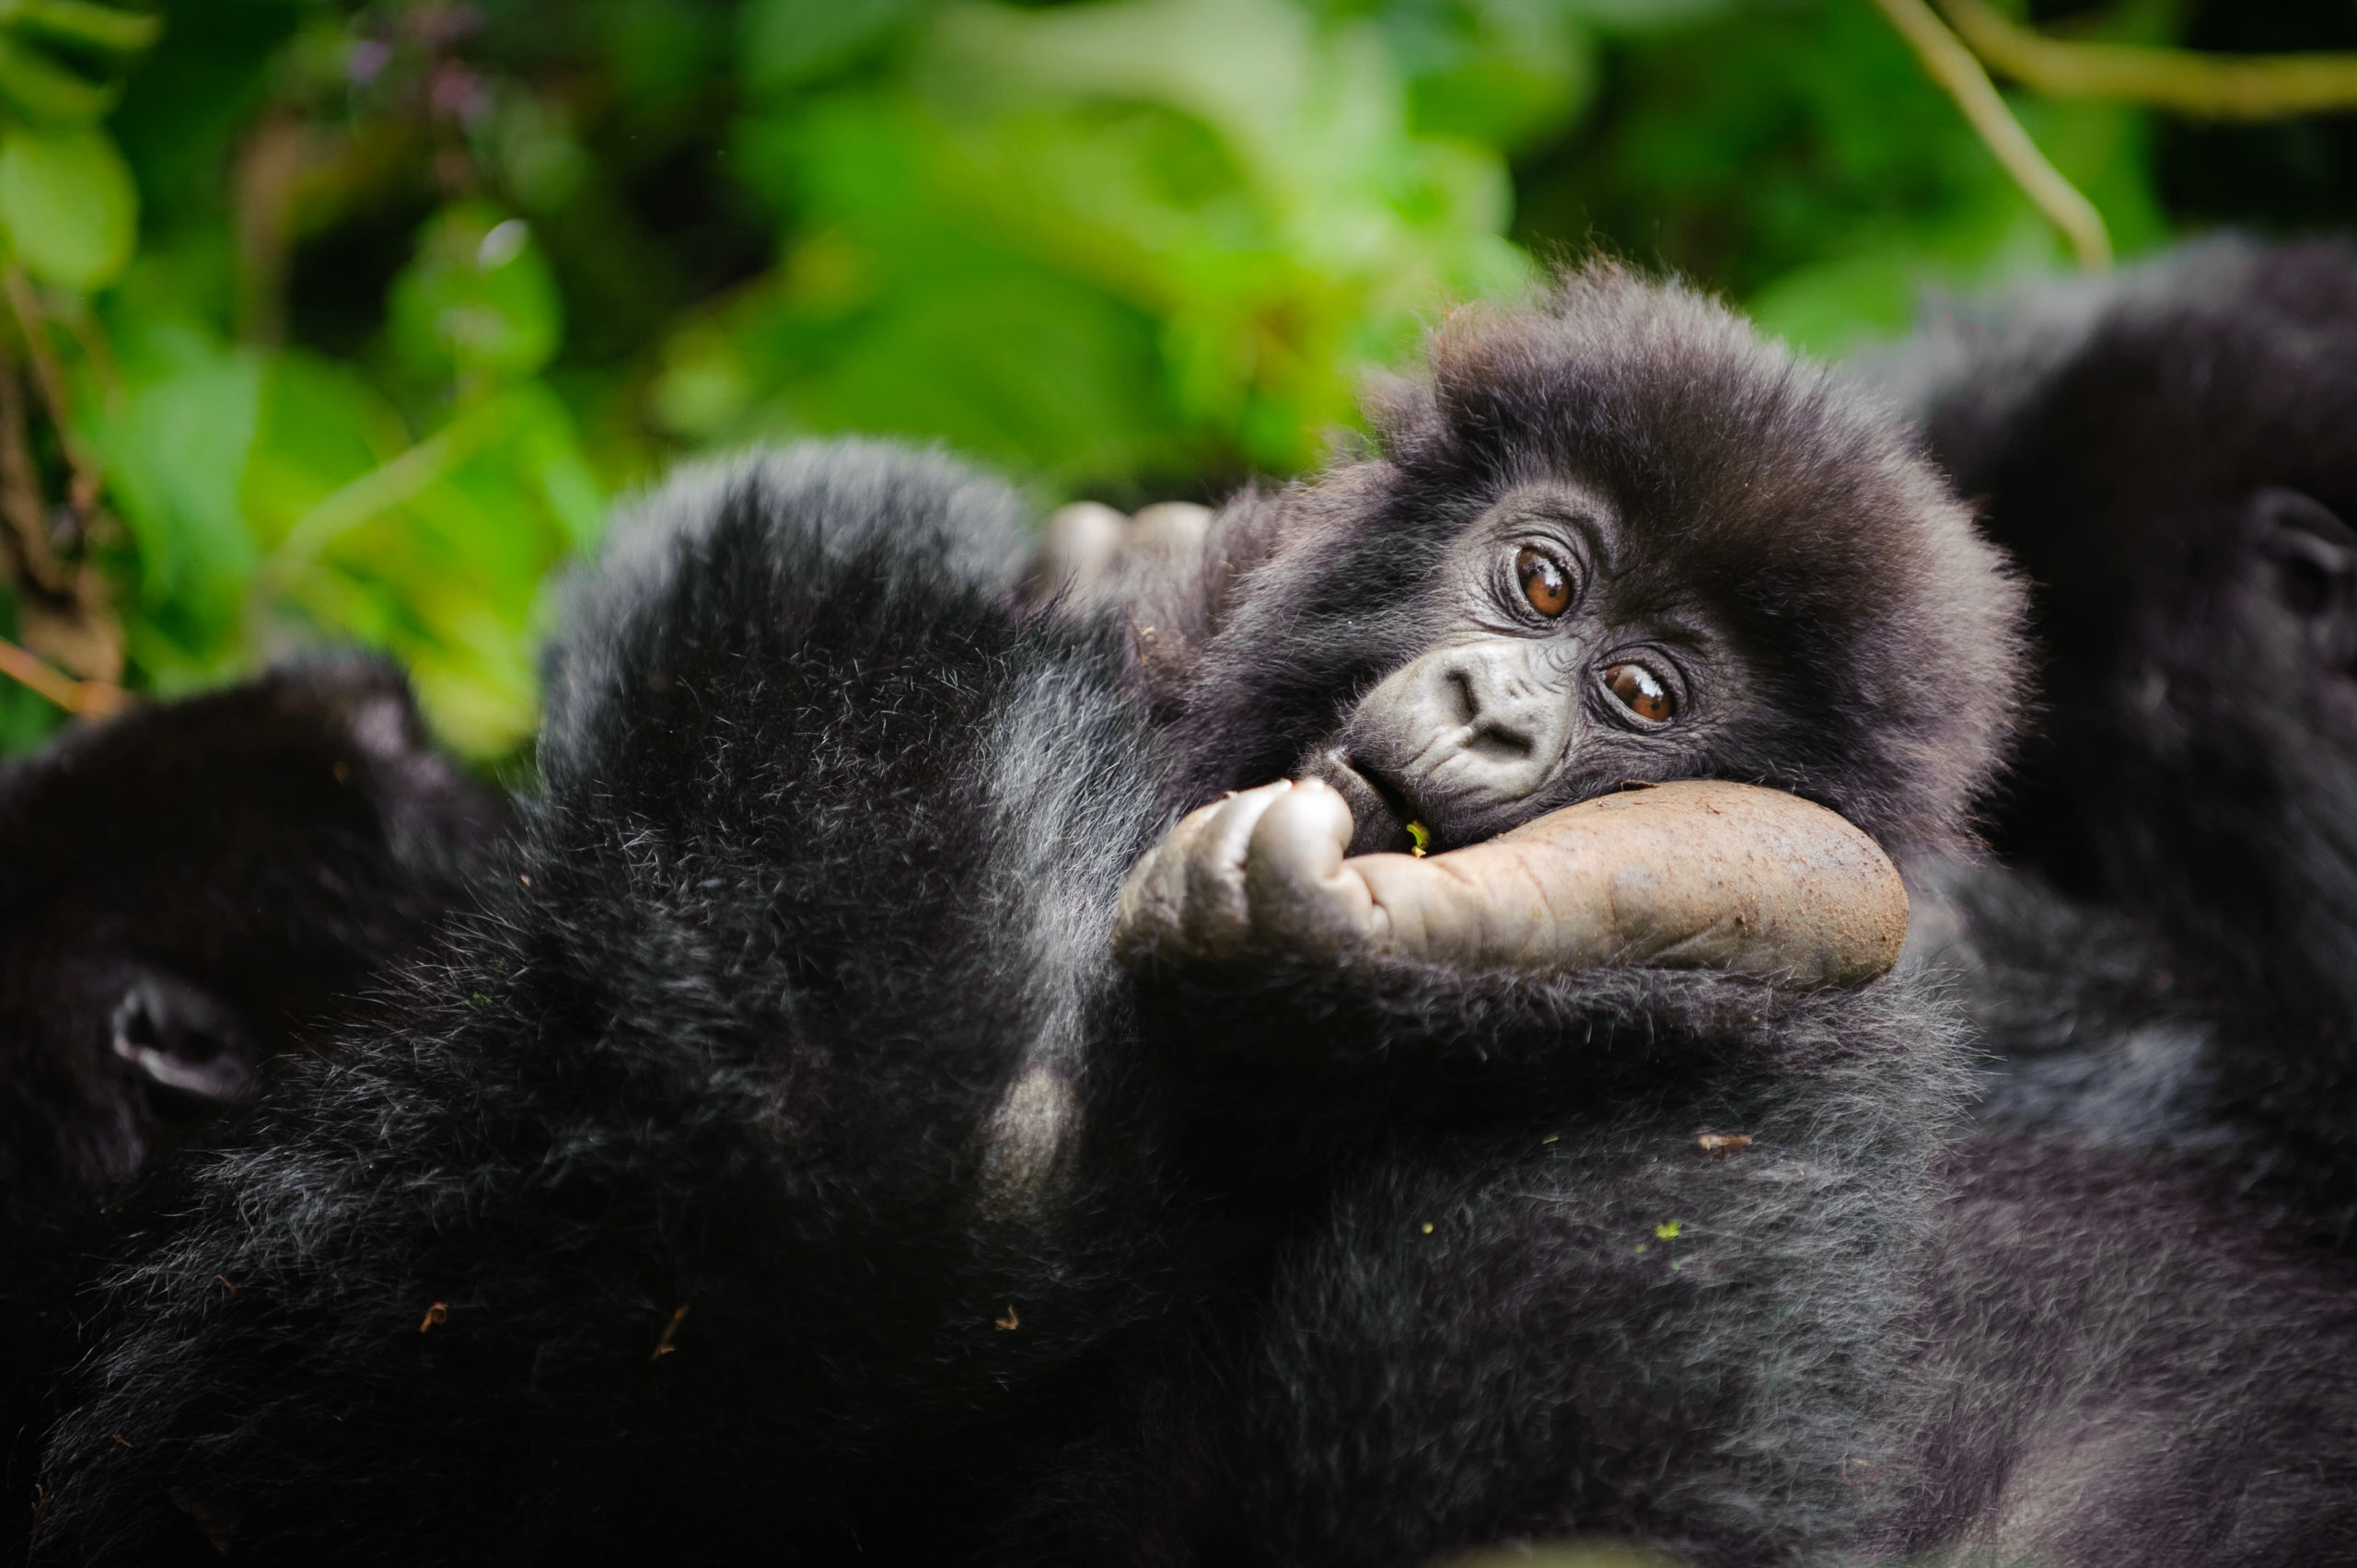 gorillas, safaris and tea plantations